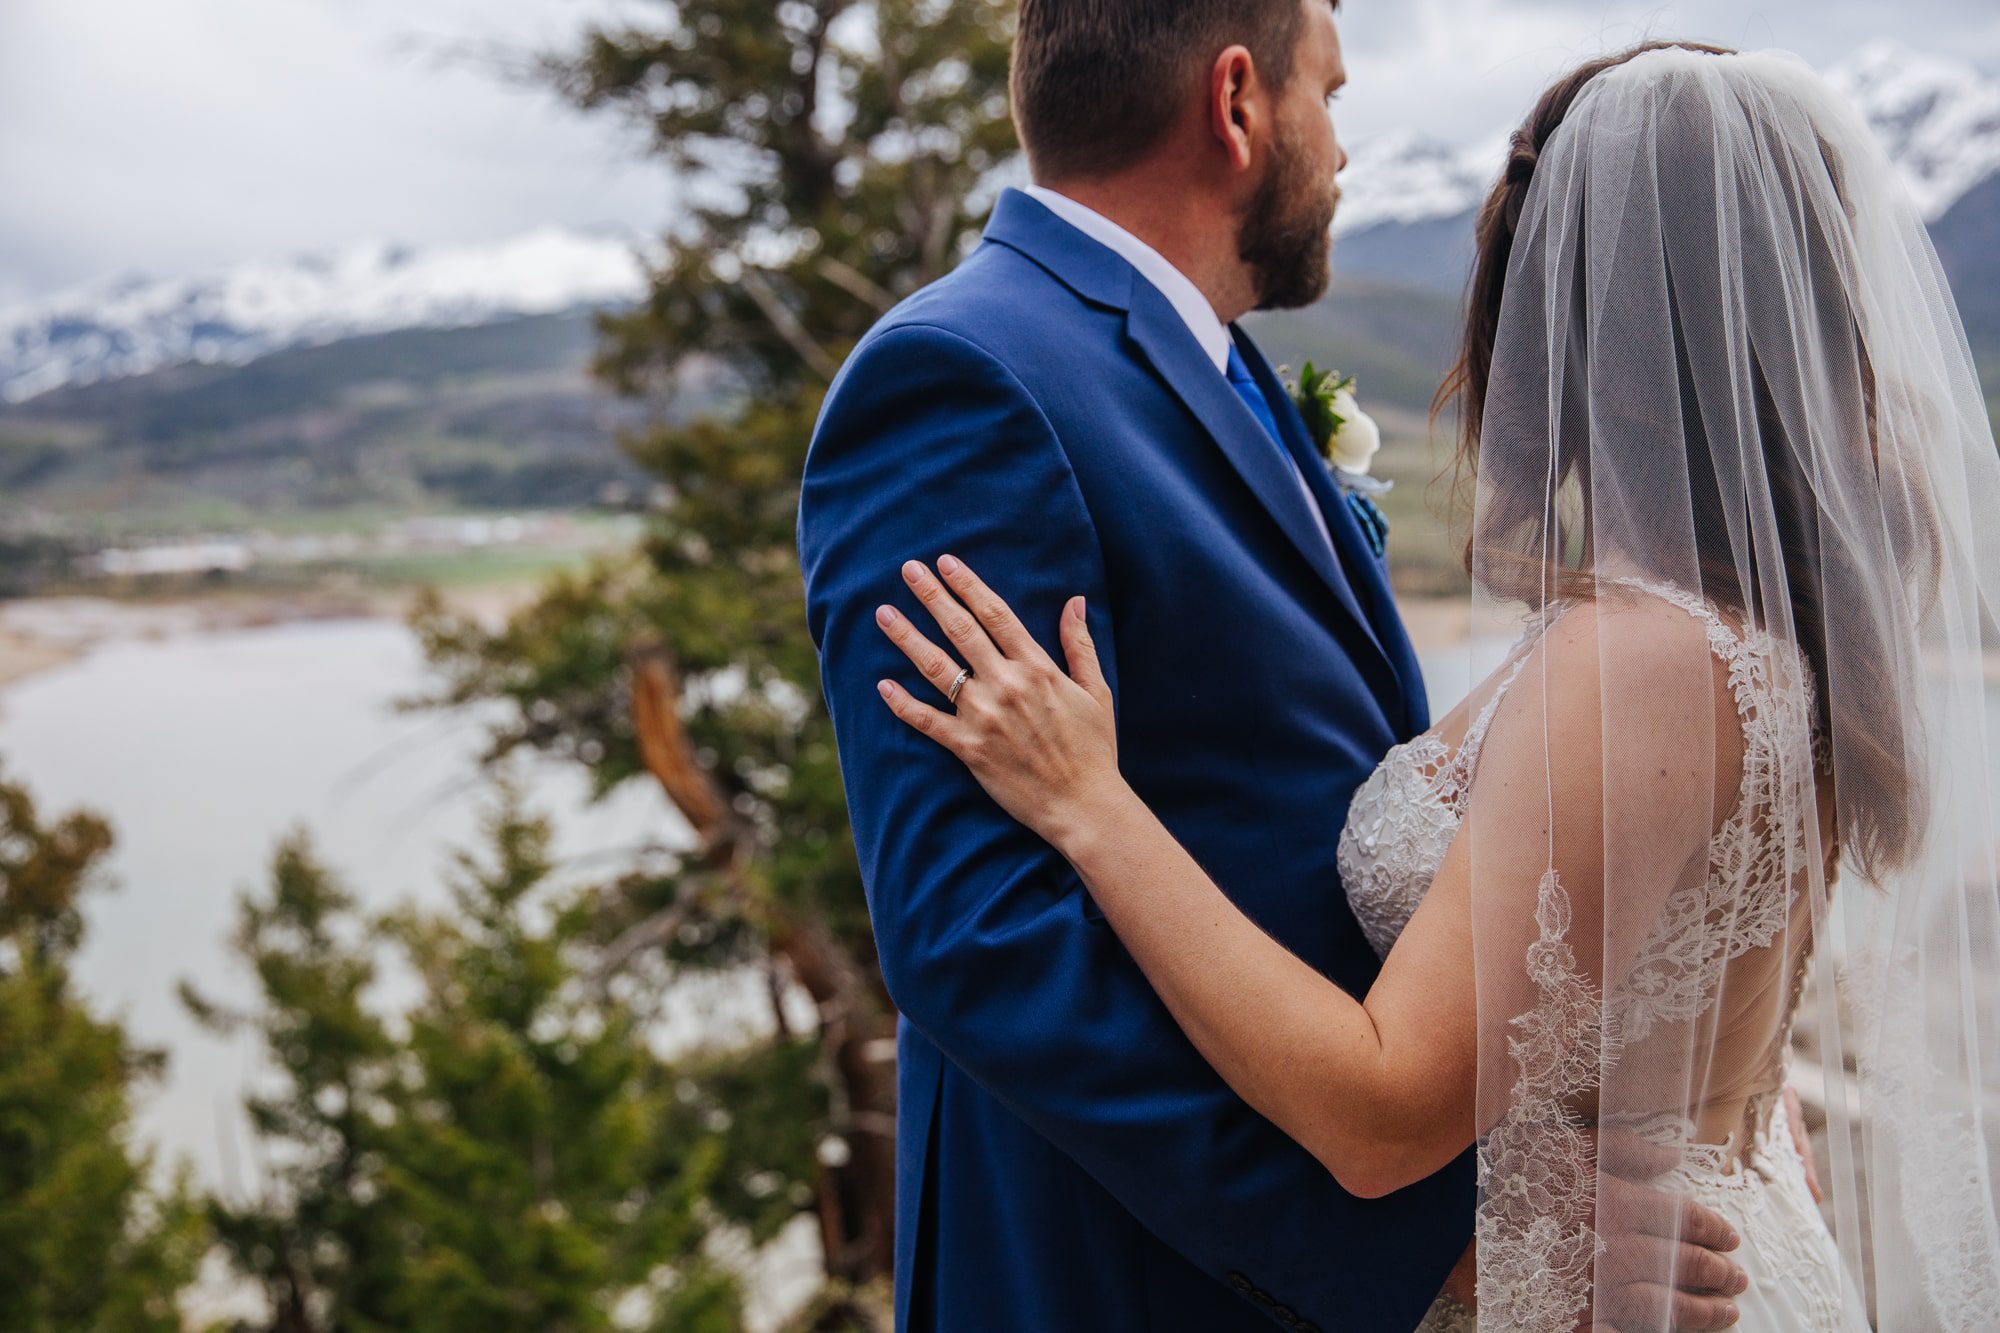 sapphire point, mountain wedding, intimate wedding, scenic wedding venue, scenic wedding, blue suit, blue suit groom, bride veil, lacy wedding dress